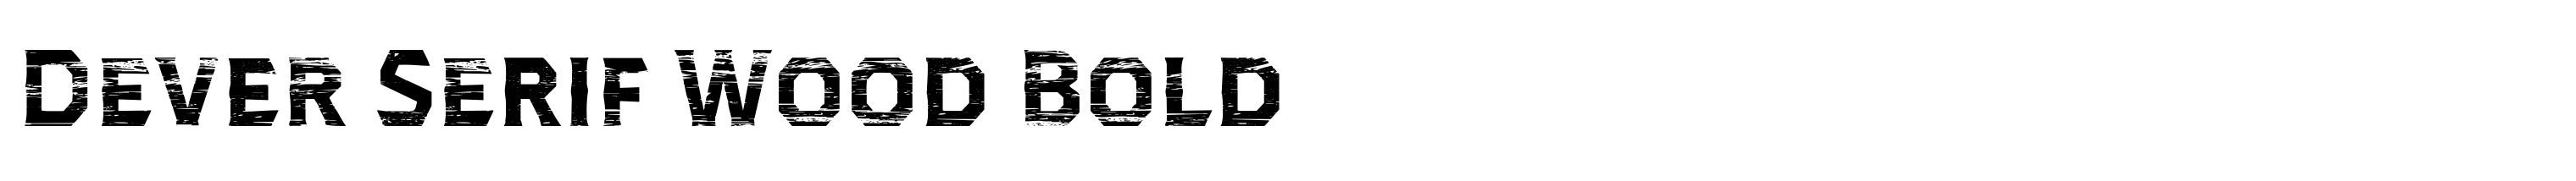 Dever Serif Wood Bold